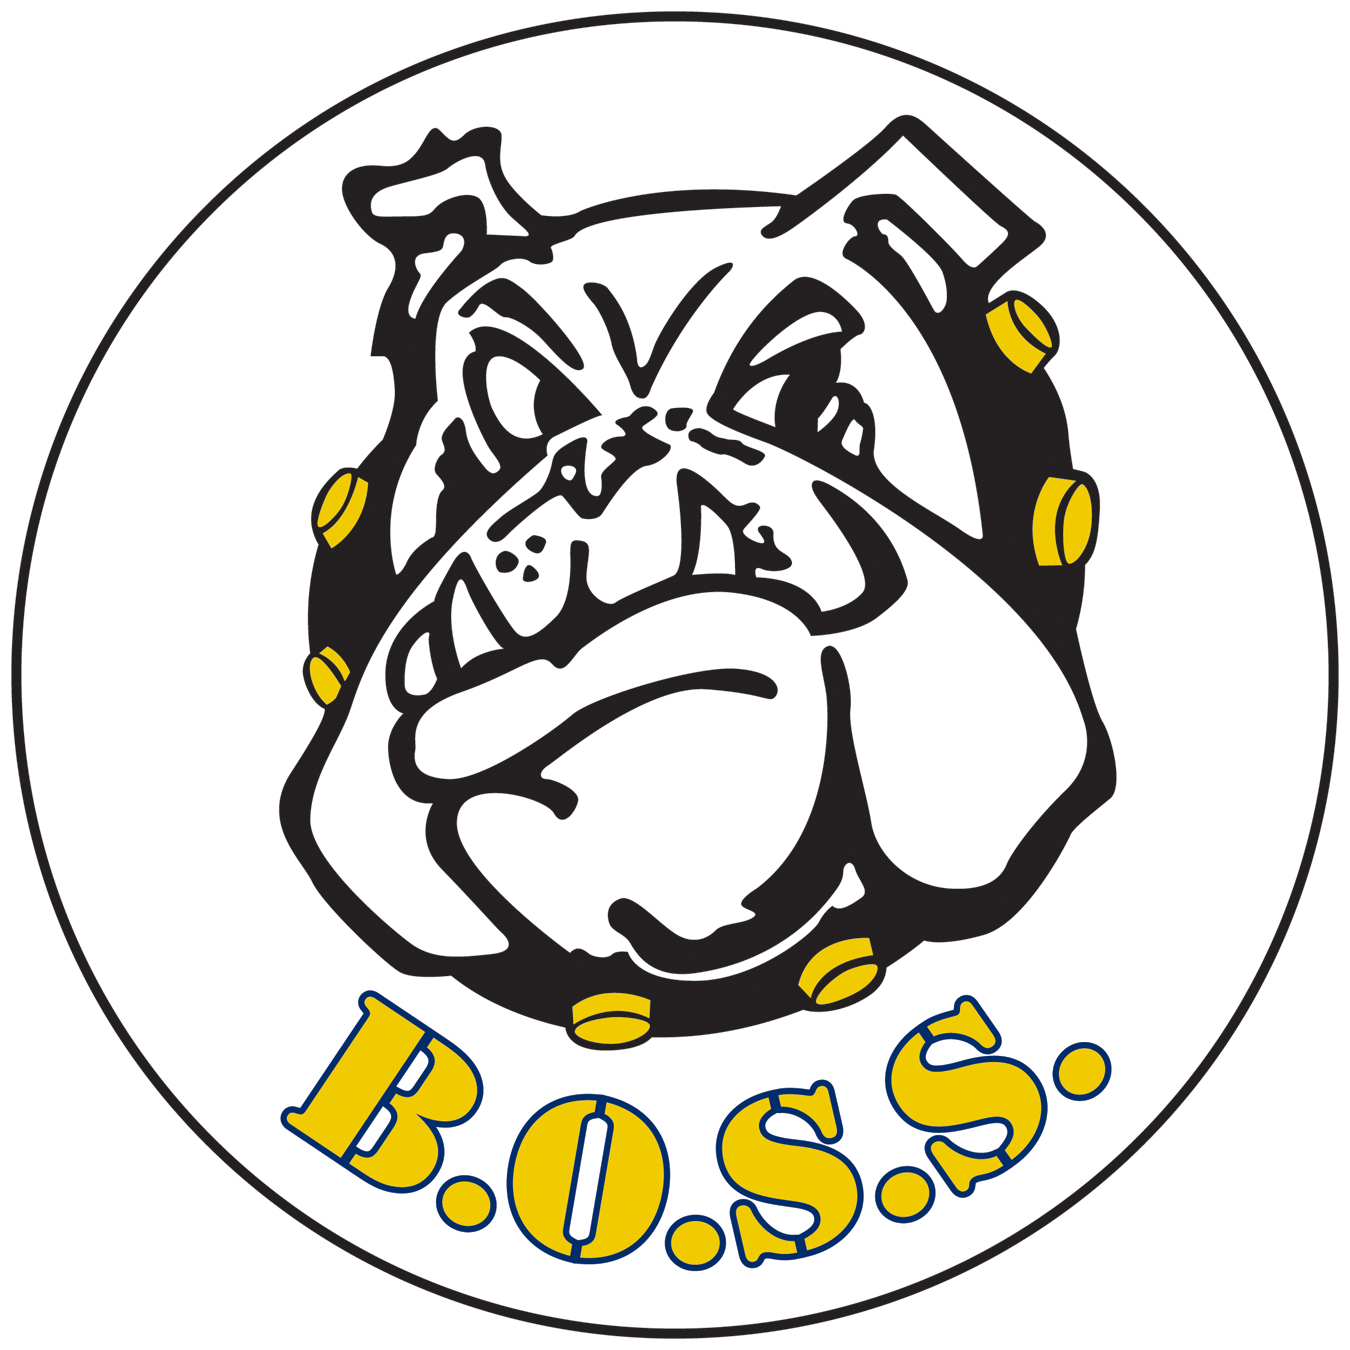 BOSS Bulldog logo.jpg